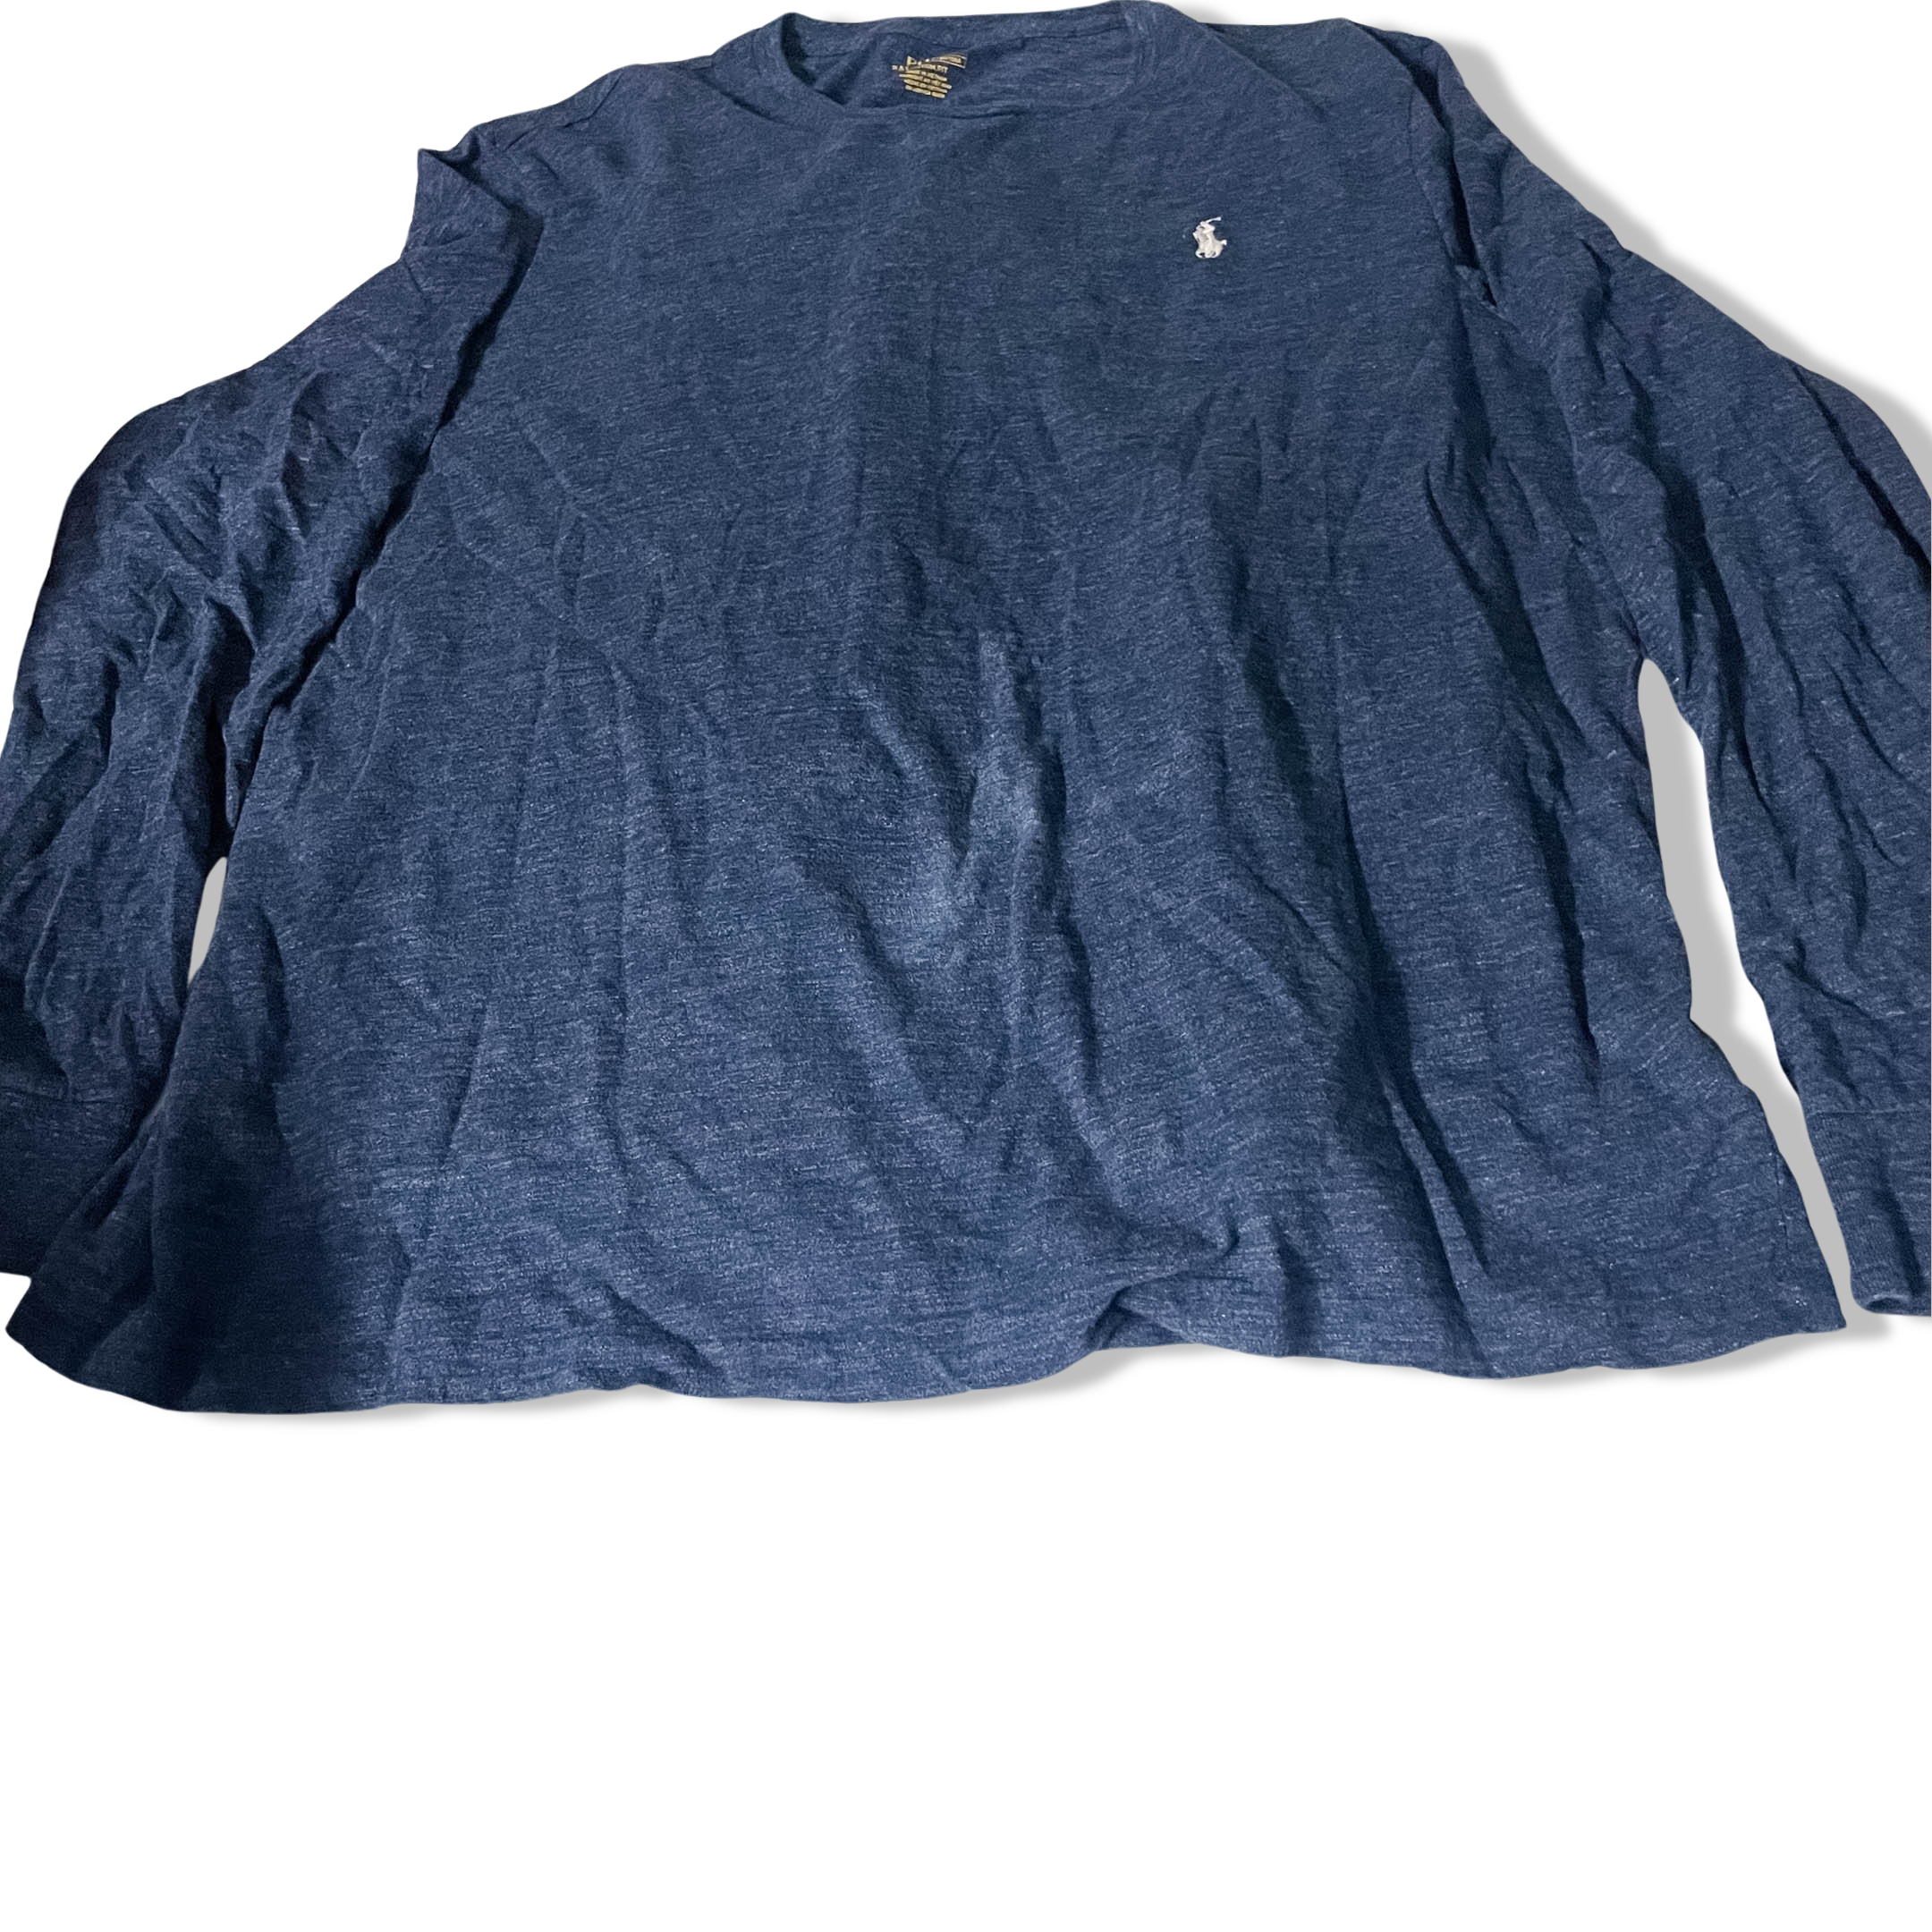 Vintage Polo Ralph Lauren Navy custom fit sweatshirt XL